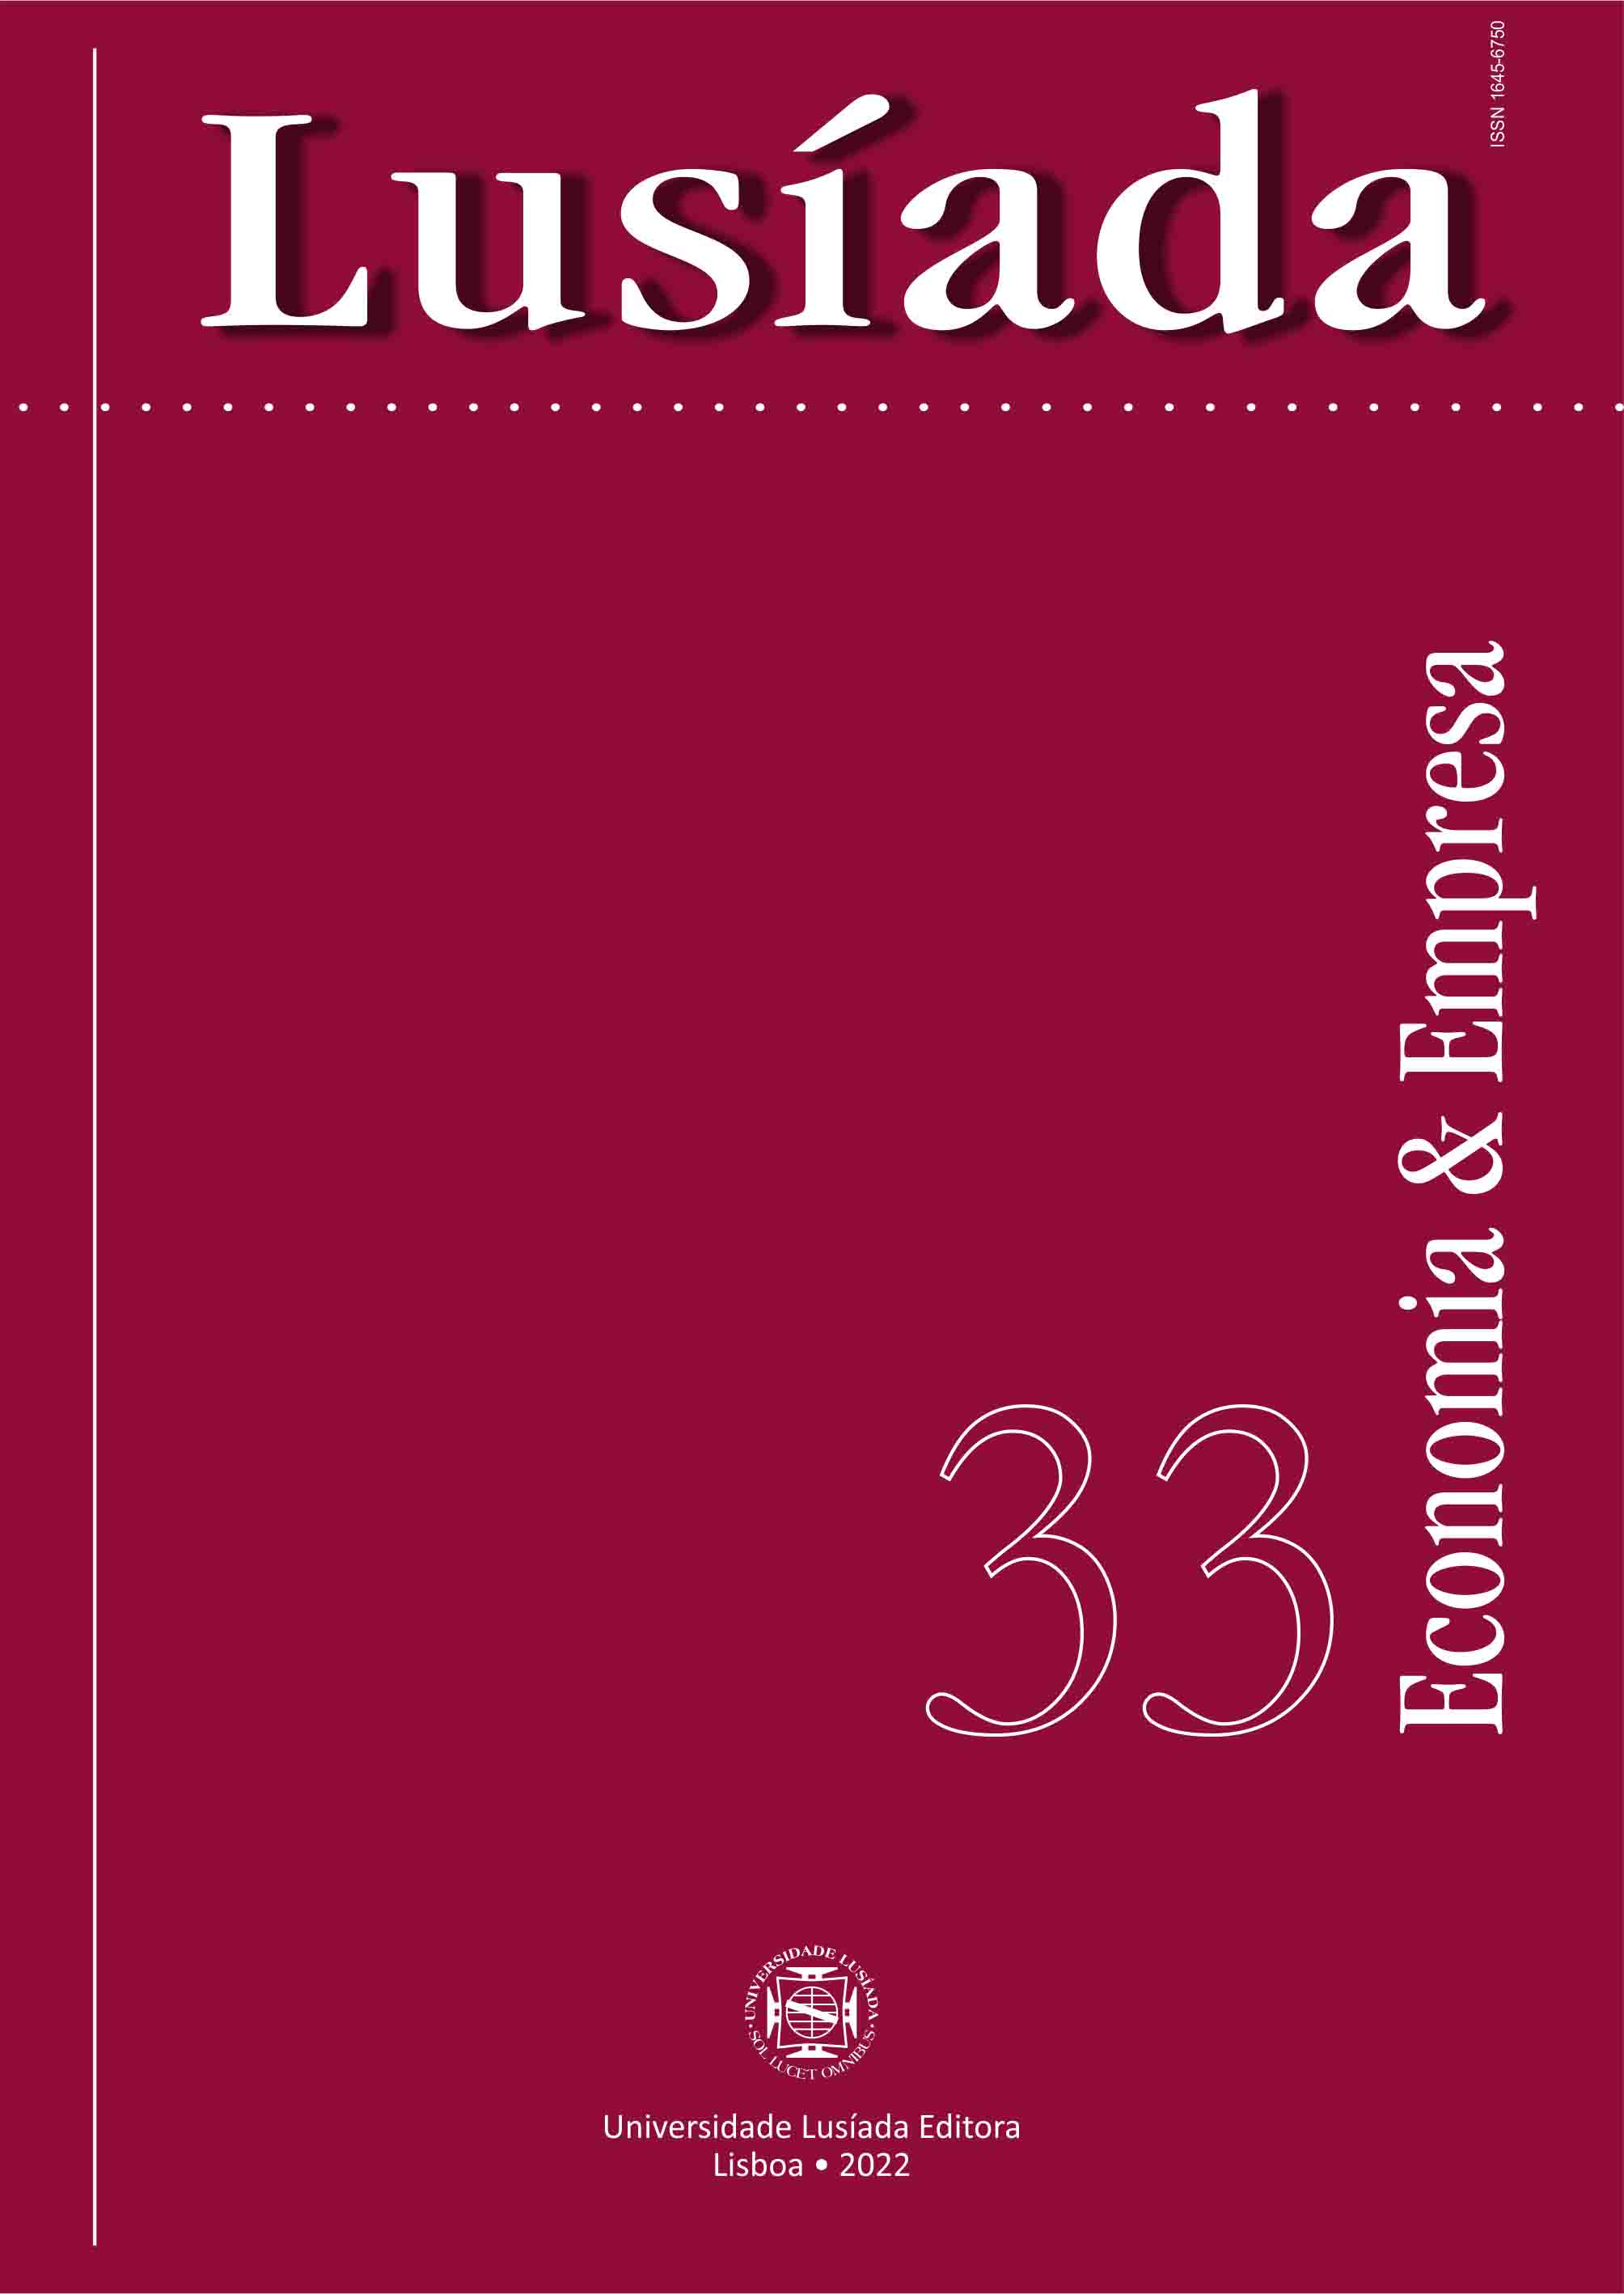 Lusíada. Economia & Empresa, n.º 33 (2022) - Universidade Lusíada Editora